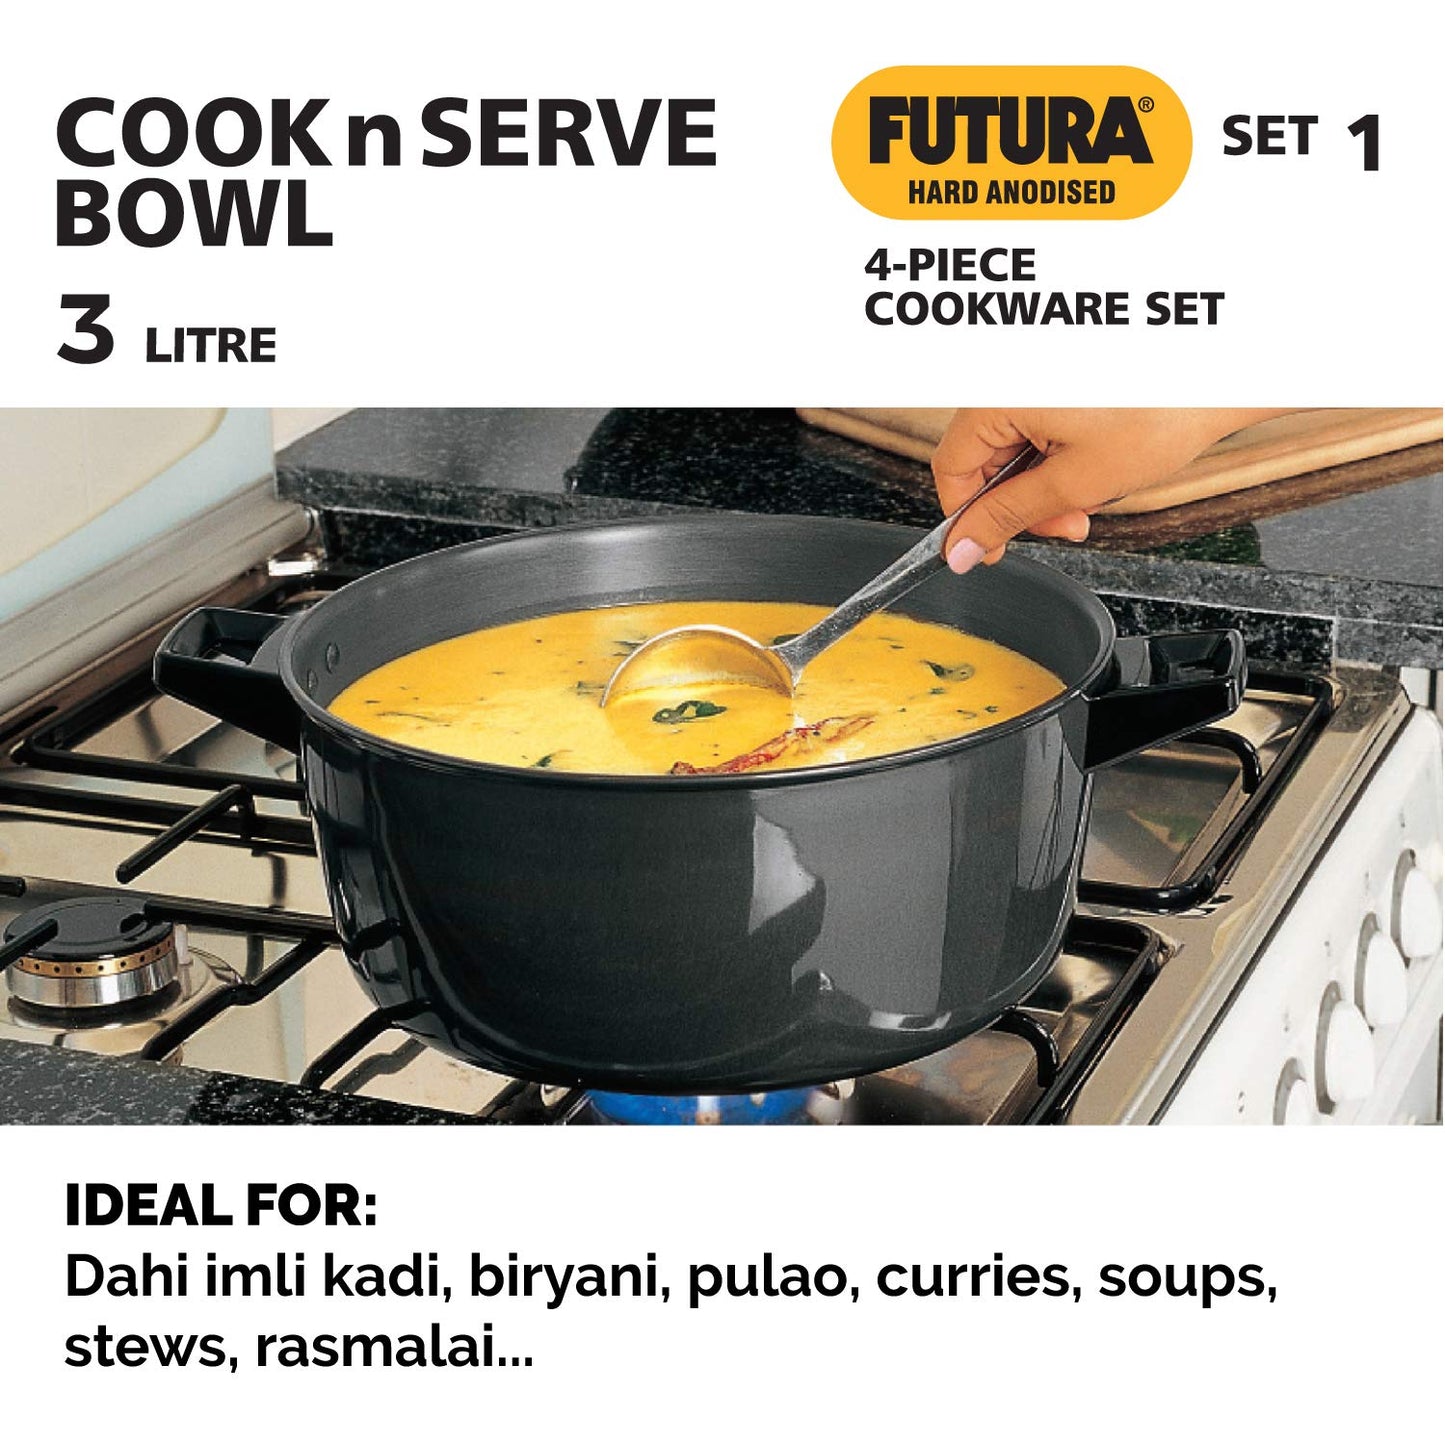 Hawkins Futura 4 Pieces Hard Anodised Cookware Set 1 - 26cm Tava, 22cm Frying Pan, 2.5 Litres Deep Fry Pan and 3 Litres Cook-n-Serve Bowl and One Hard Anodised Lid -ASET1